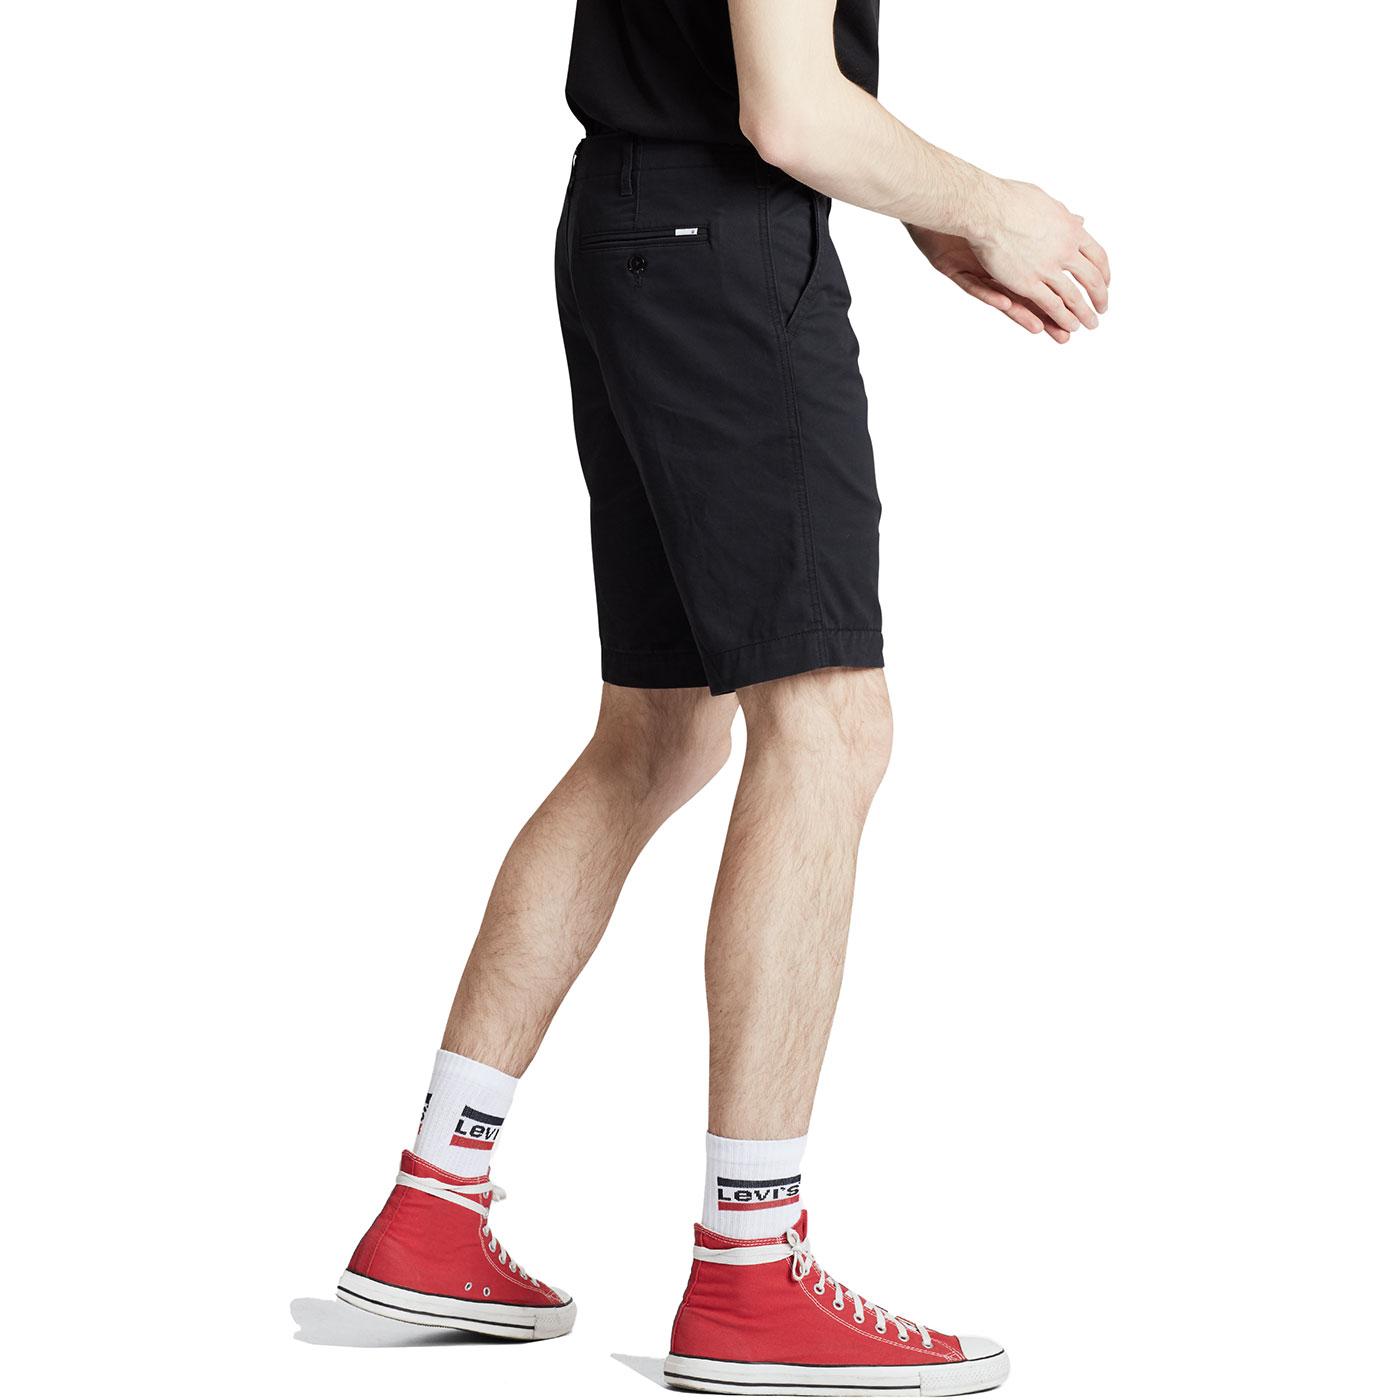 502 true chino shorts